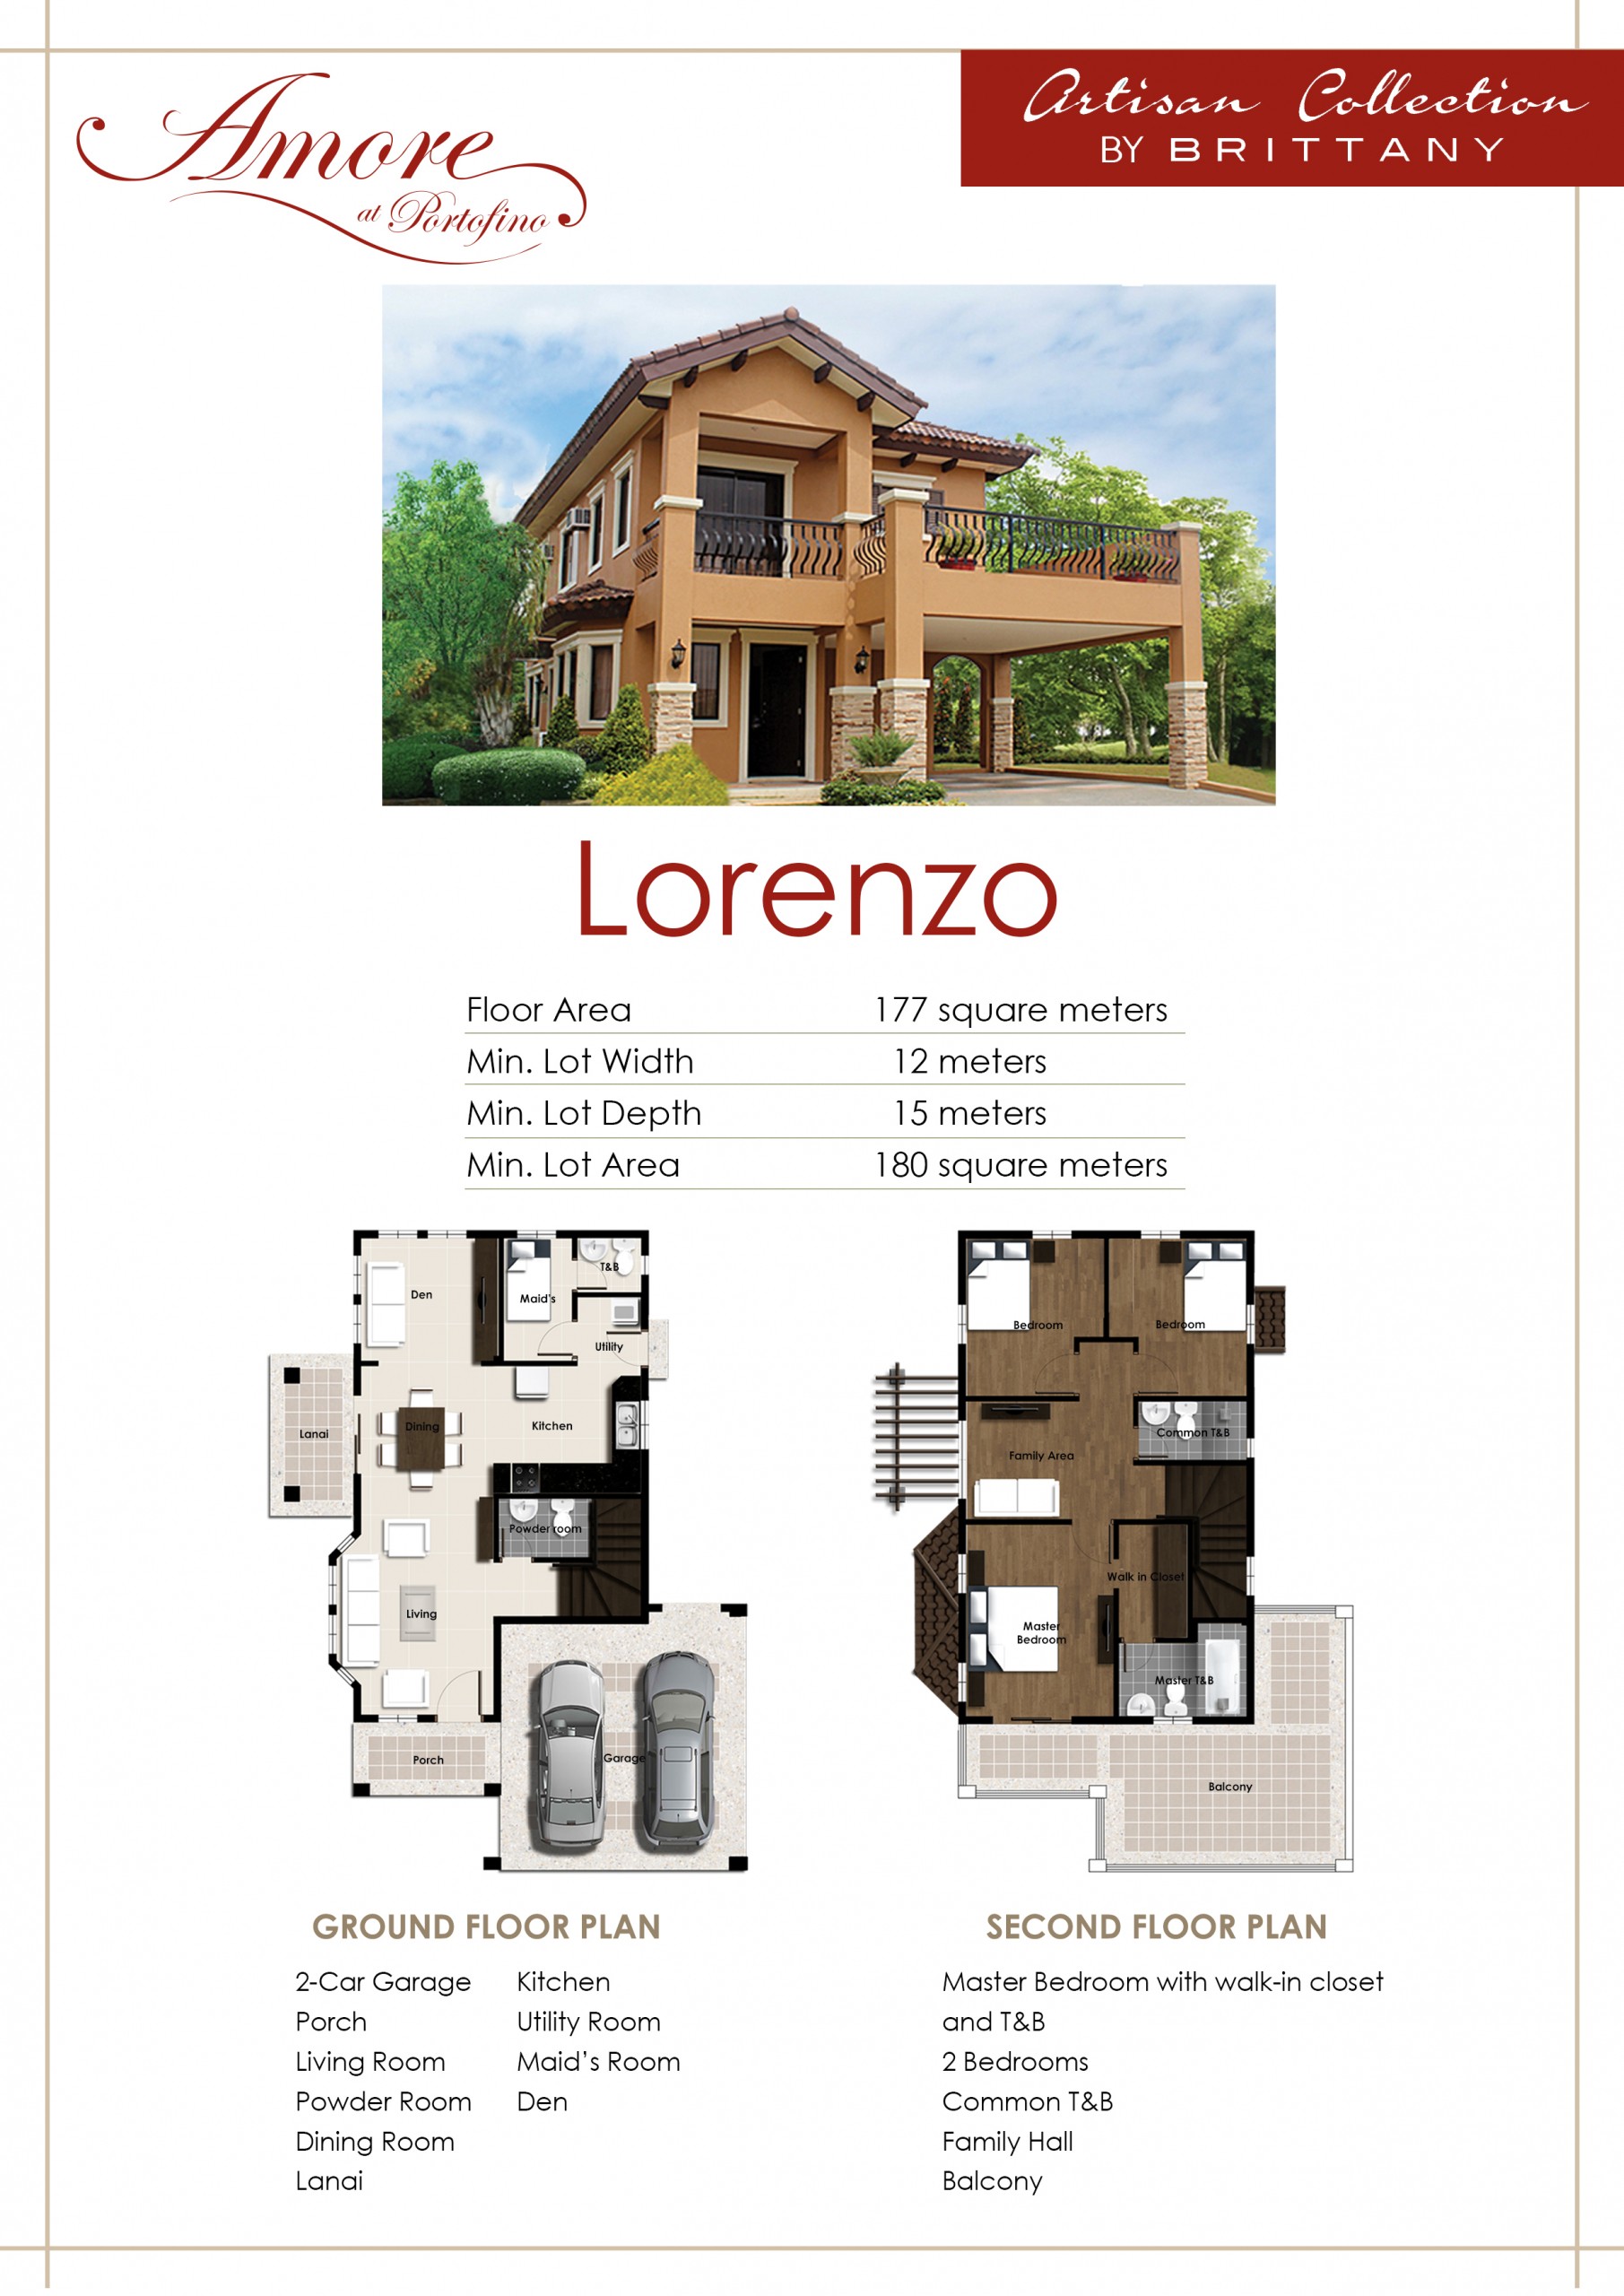 Floor plan of Lorenzo Luxury Home